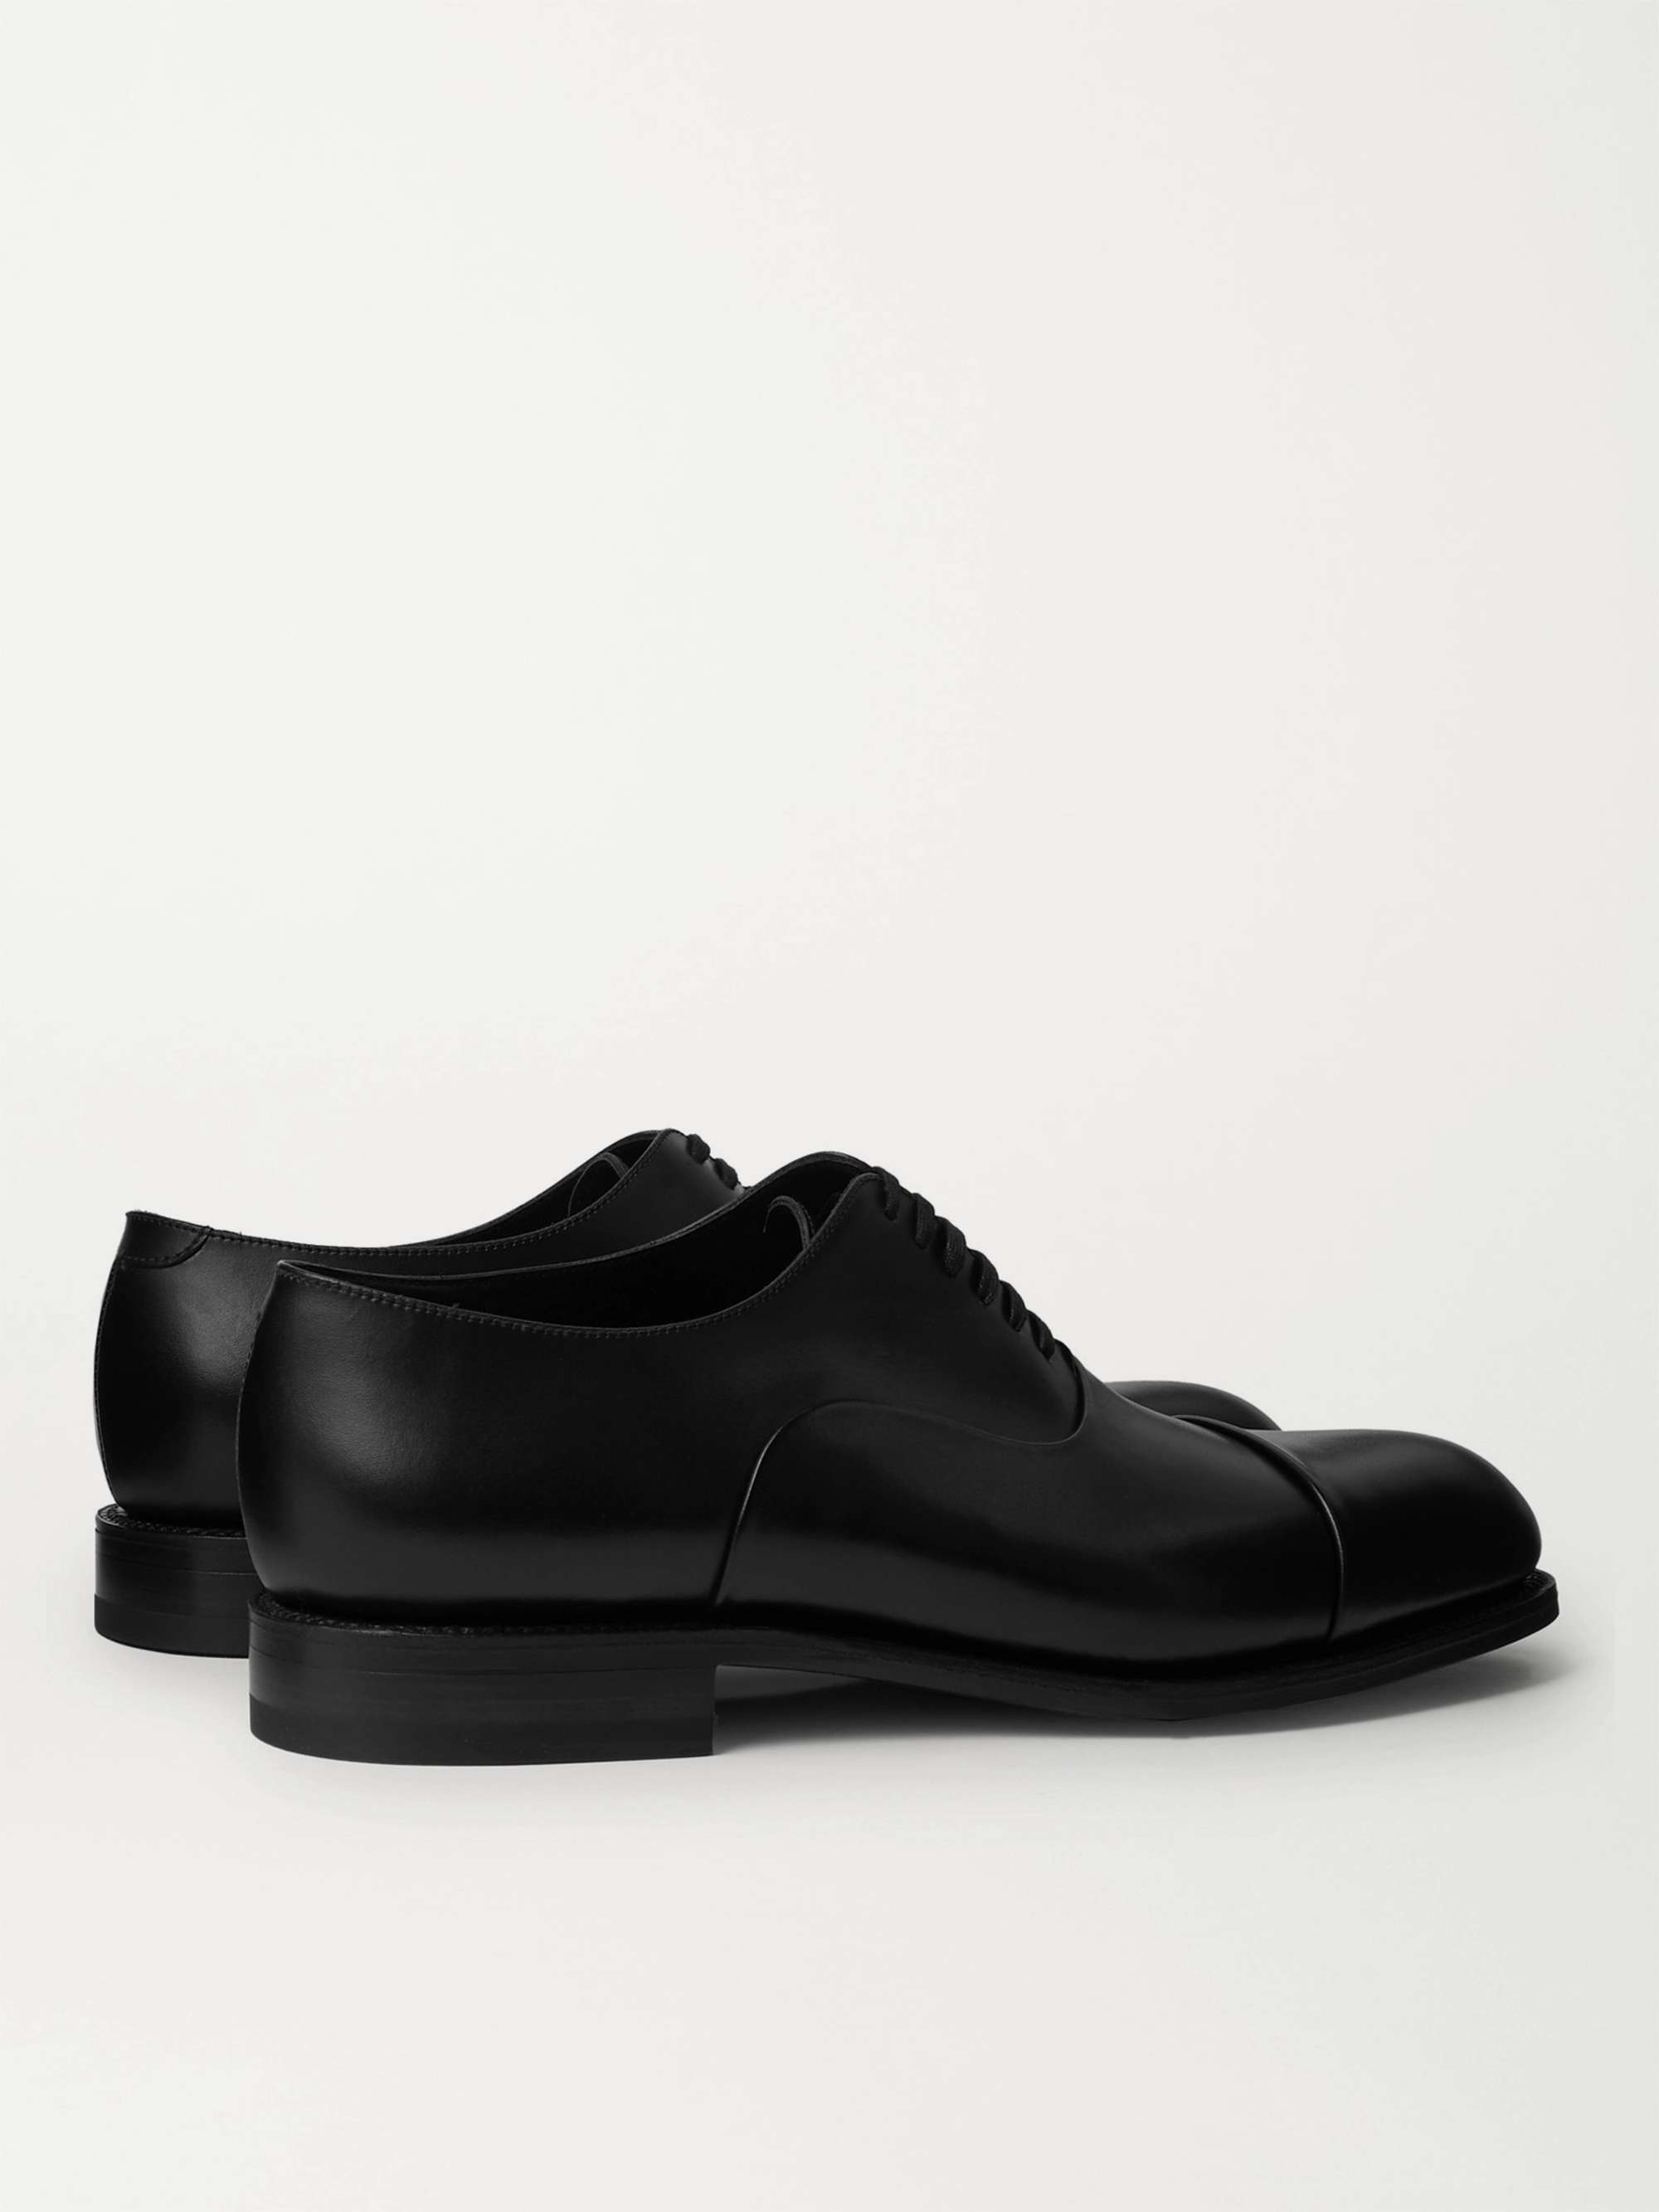 J.M. Weston Leather Oxford Shoes